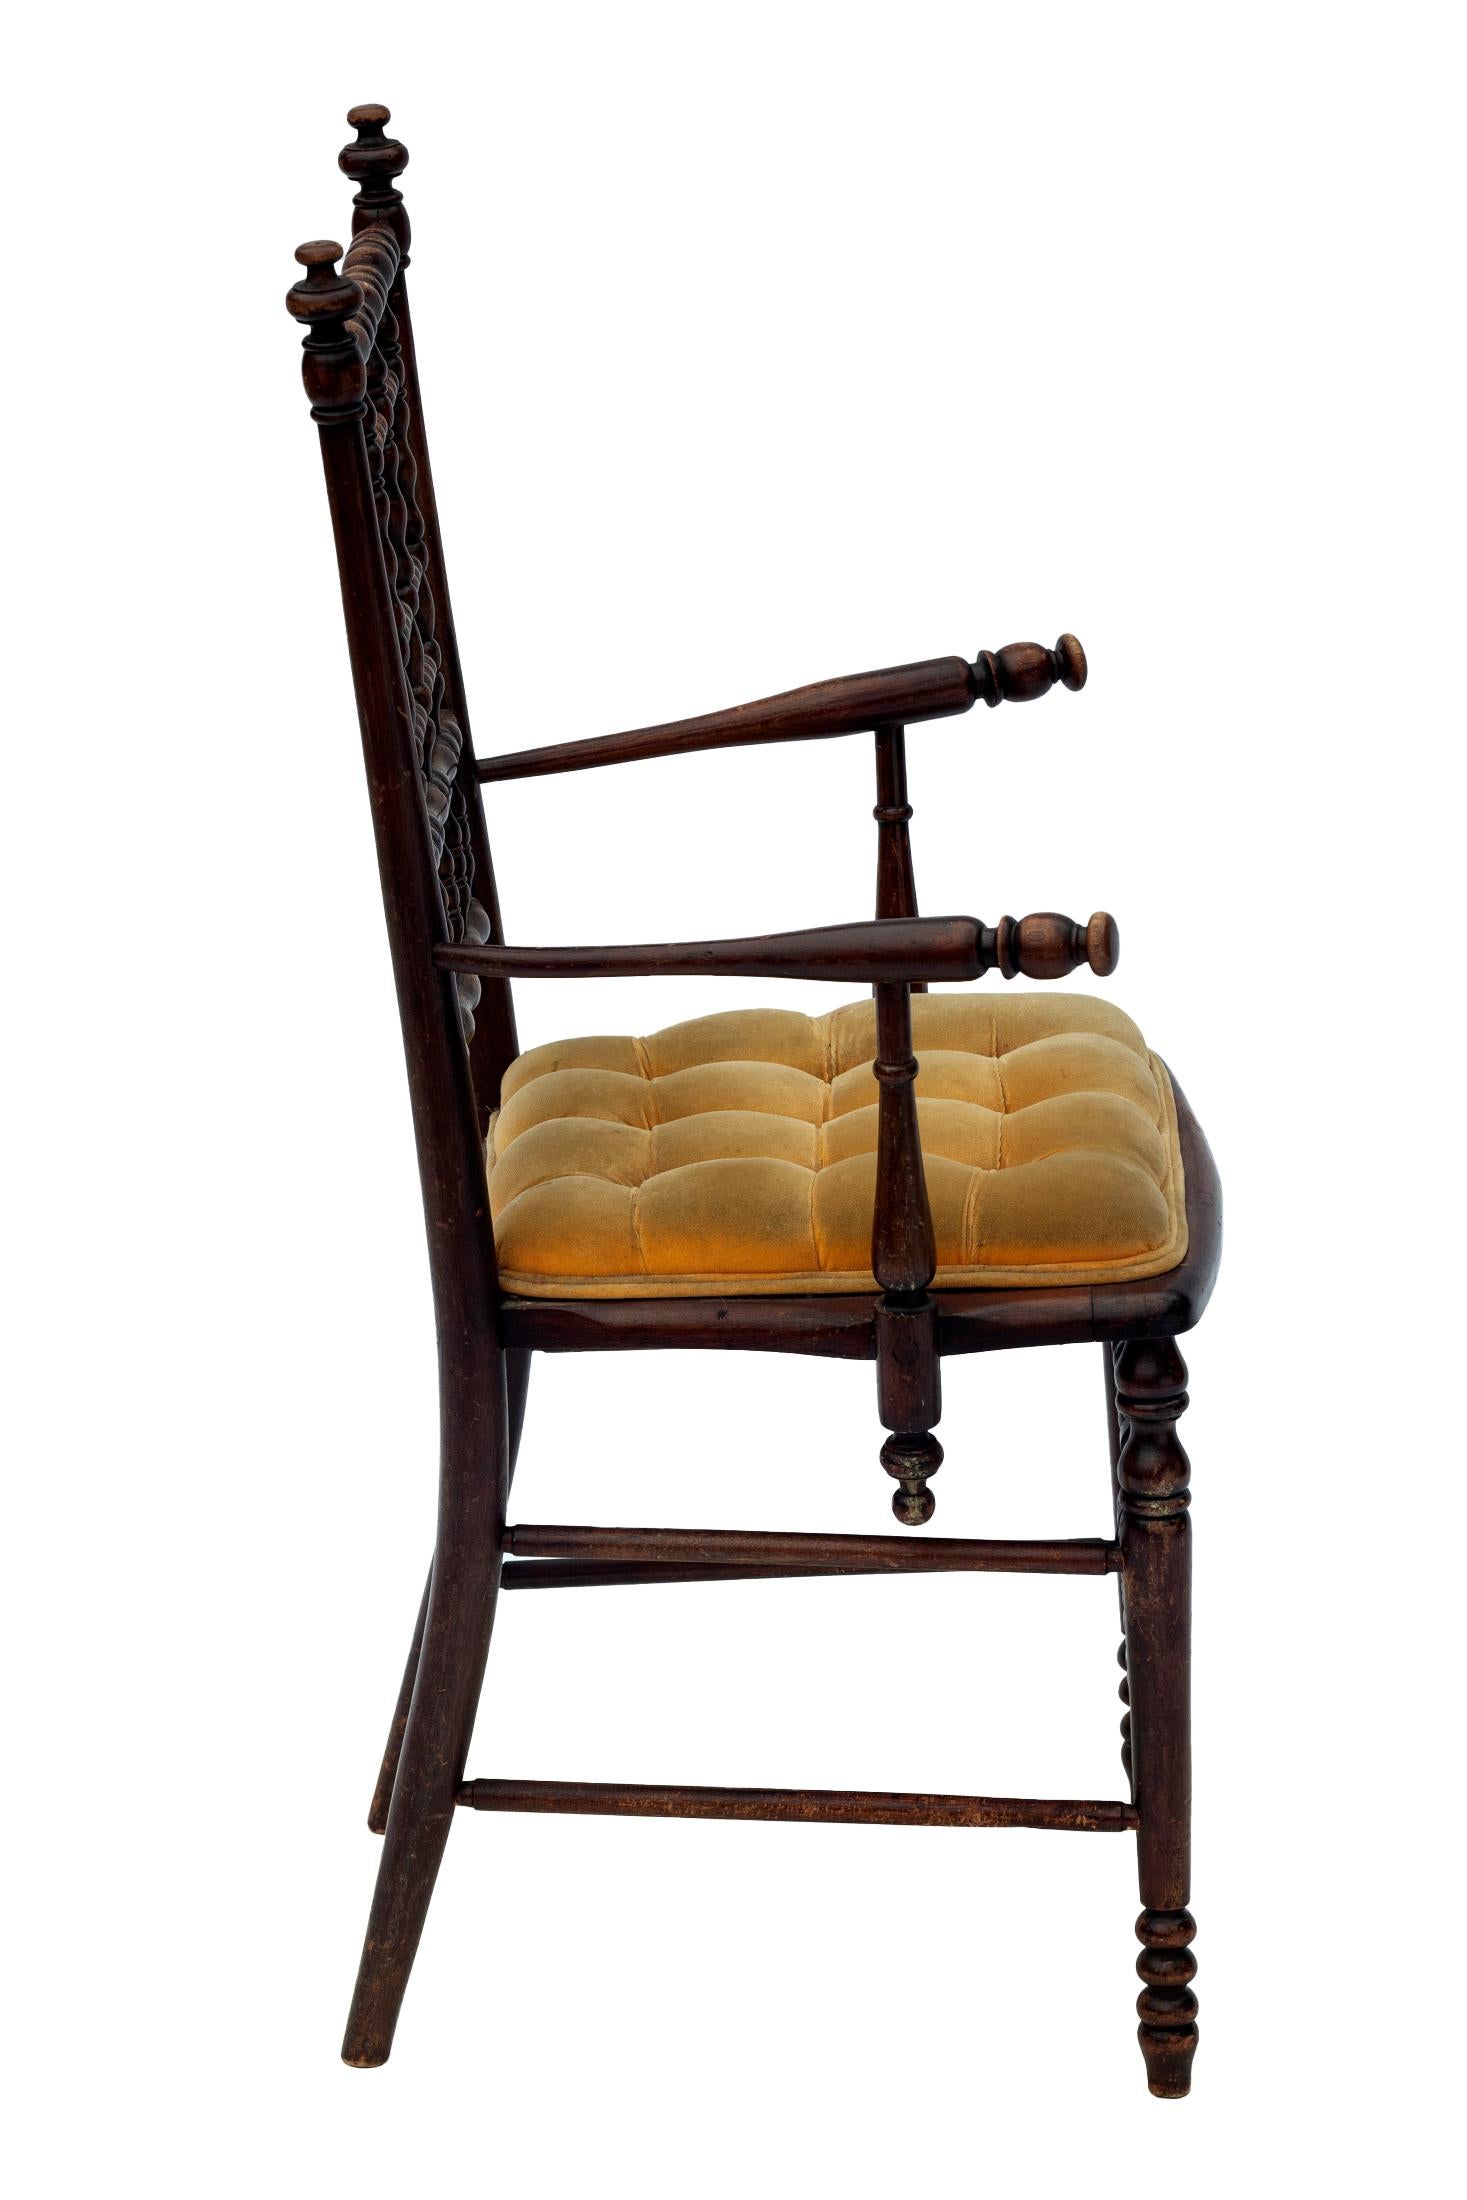 Arts & Crafts hardwood chair with velvet cushion